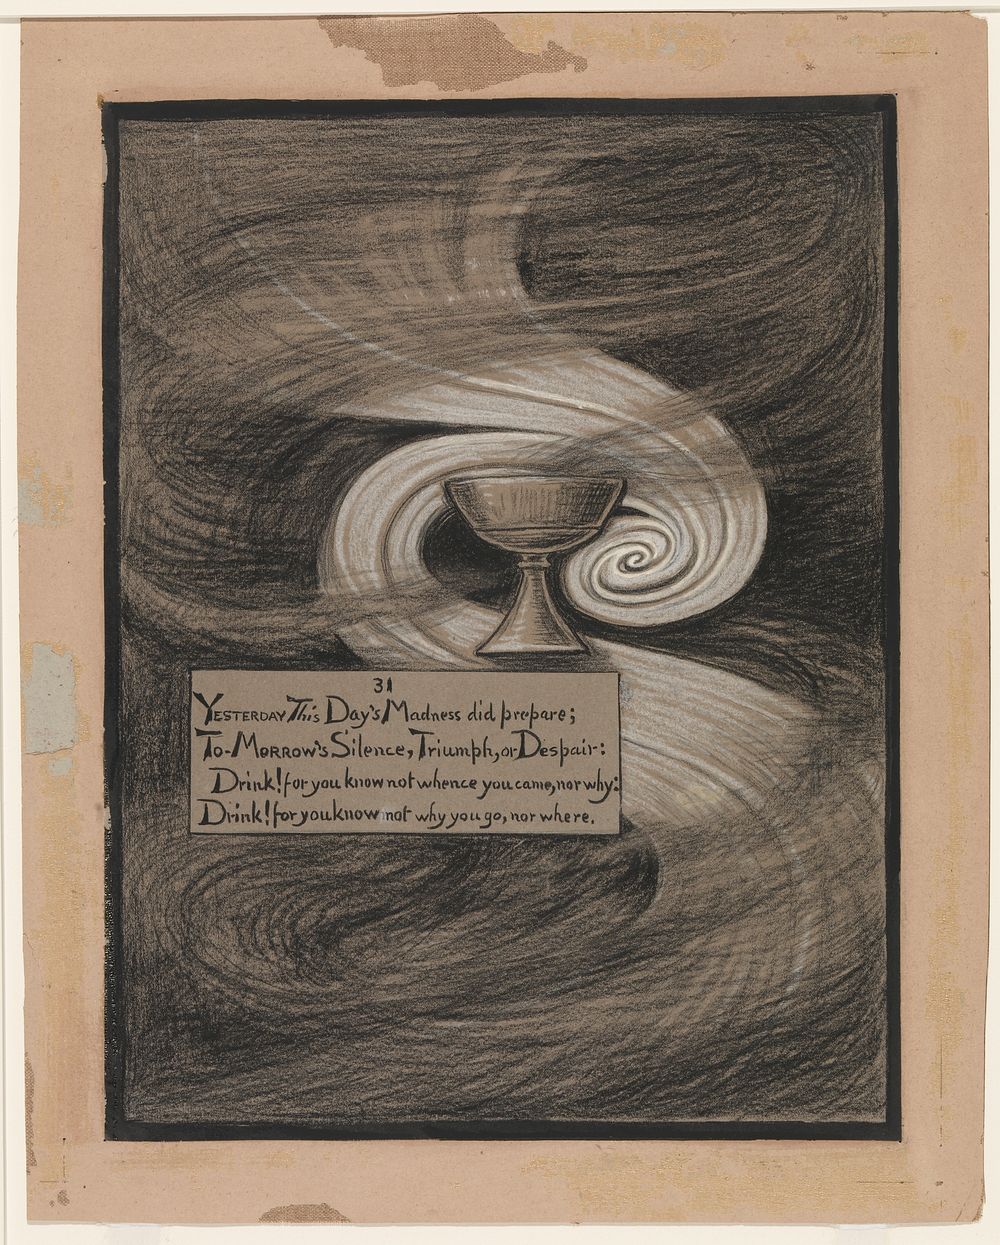 (Illustration for Rubáiyát of Omar Khayyám) The Cup of Despair